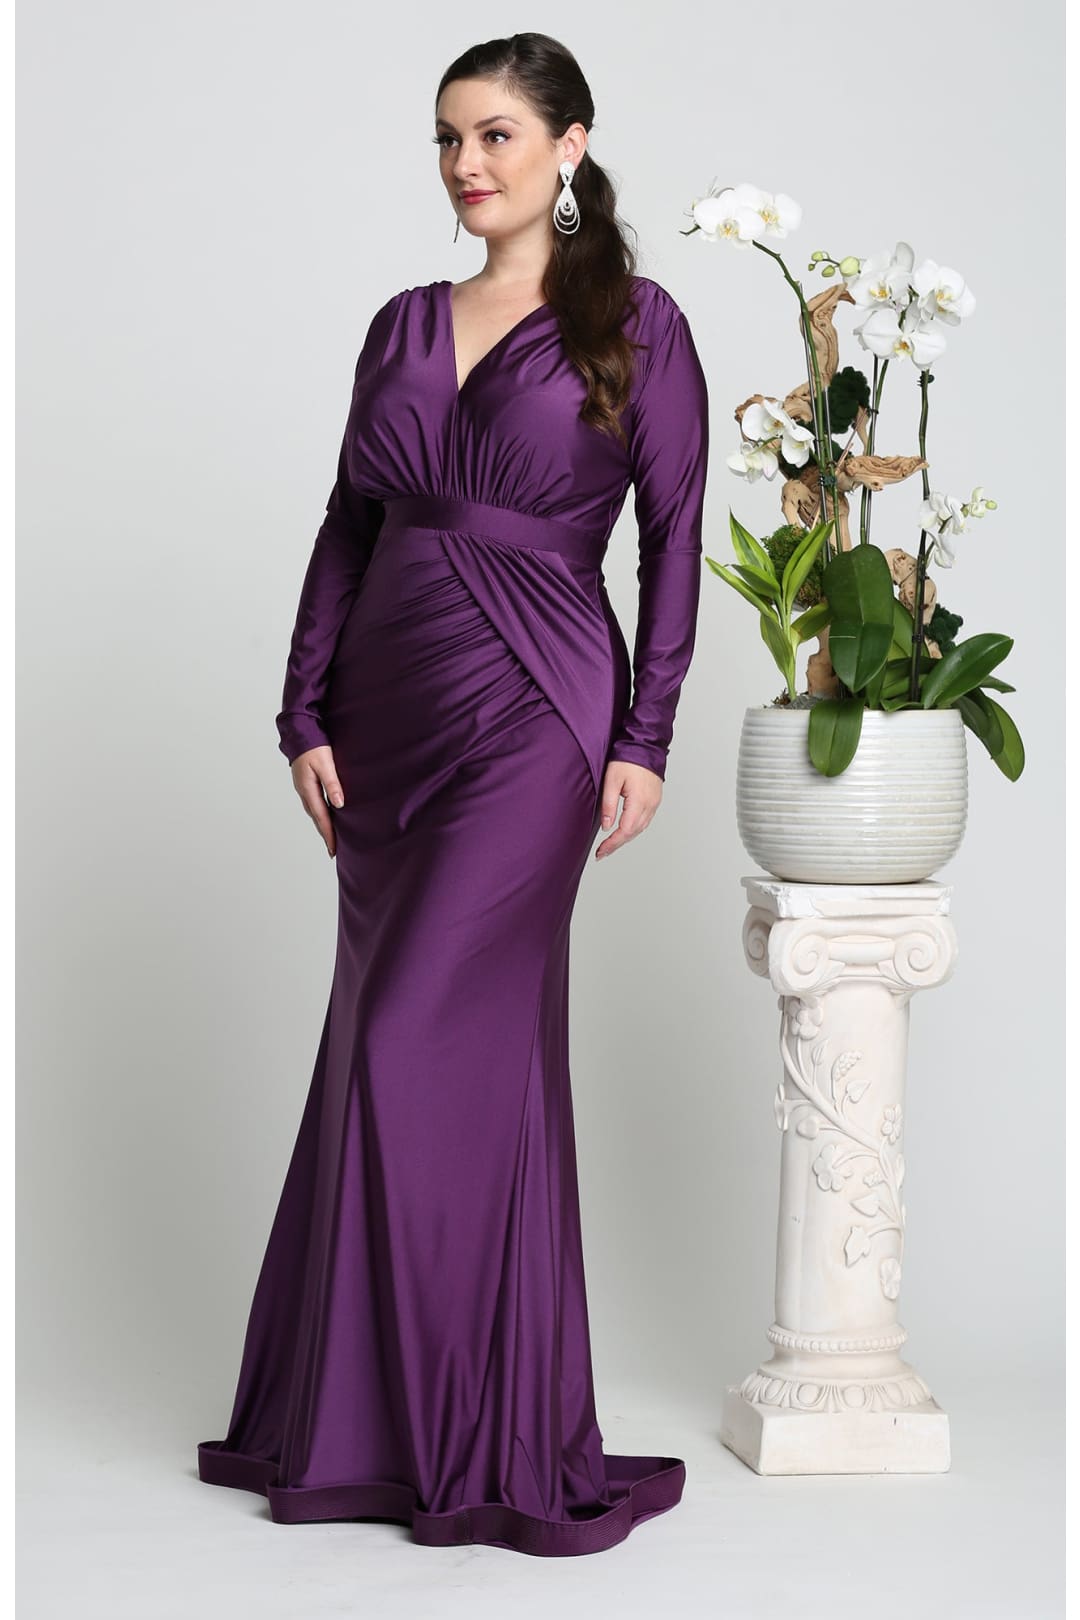 May Queen MQ1722 Cap Sleeve Glitter Long Plus Size Dress